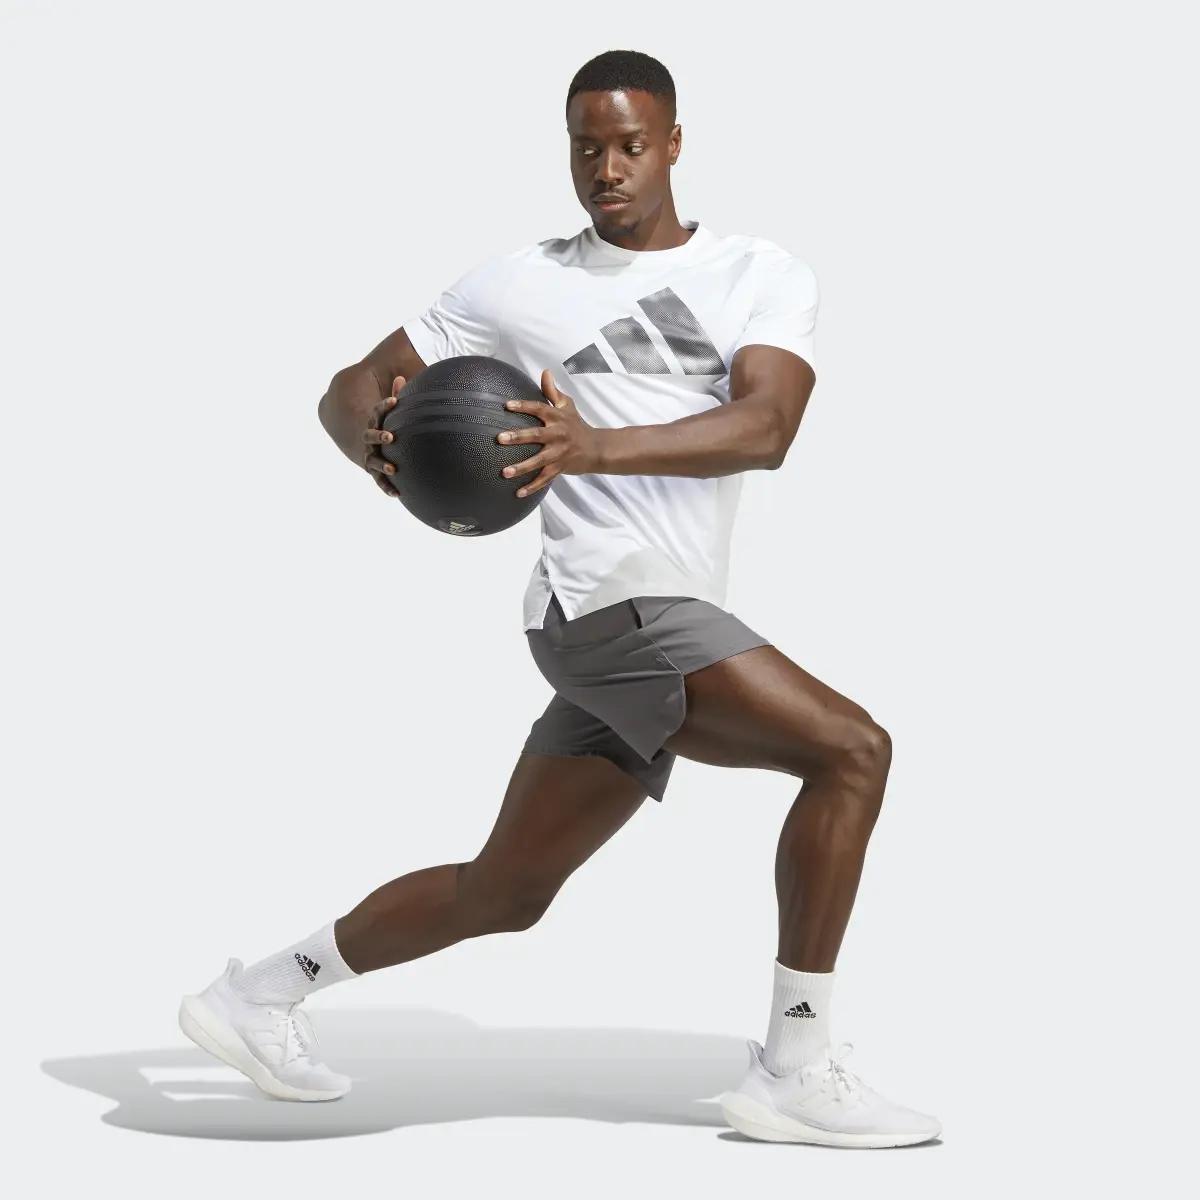 Adidas AEROREADY Designed for Movement Shorts. 3